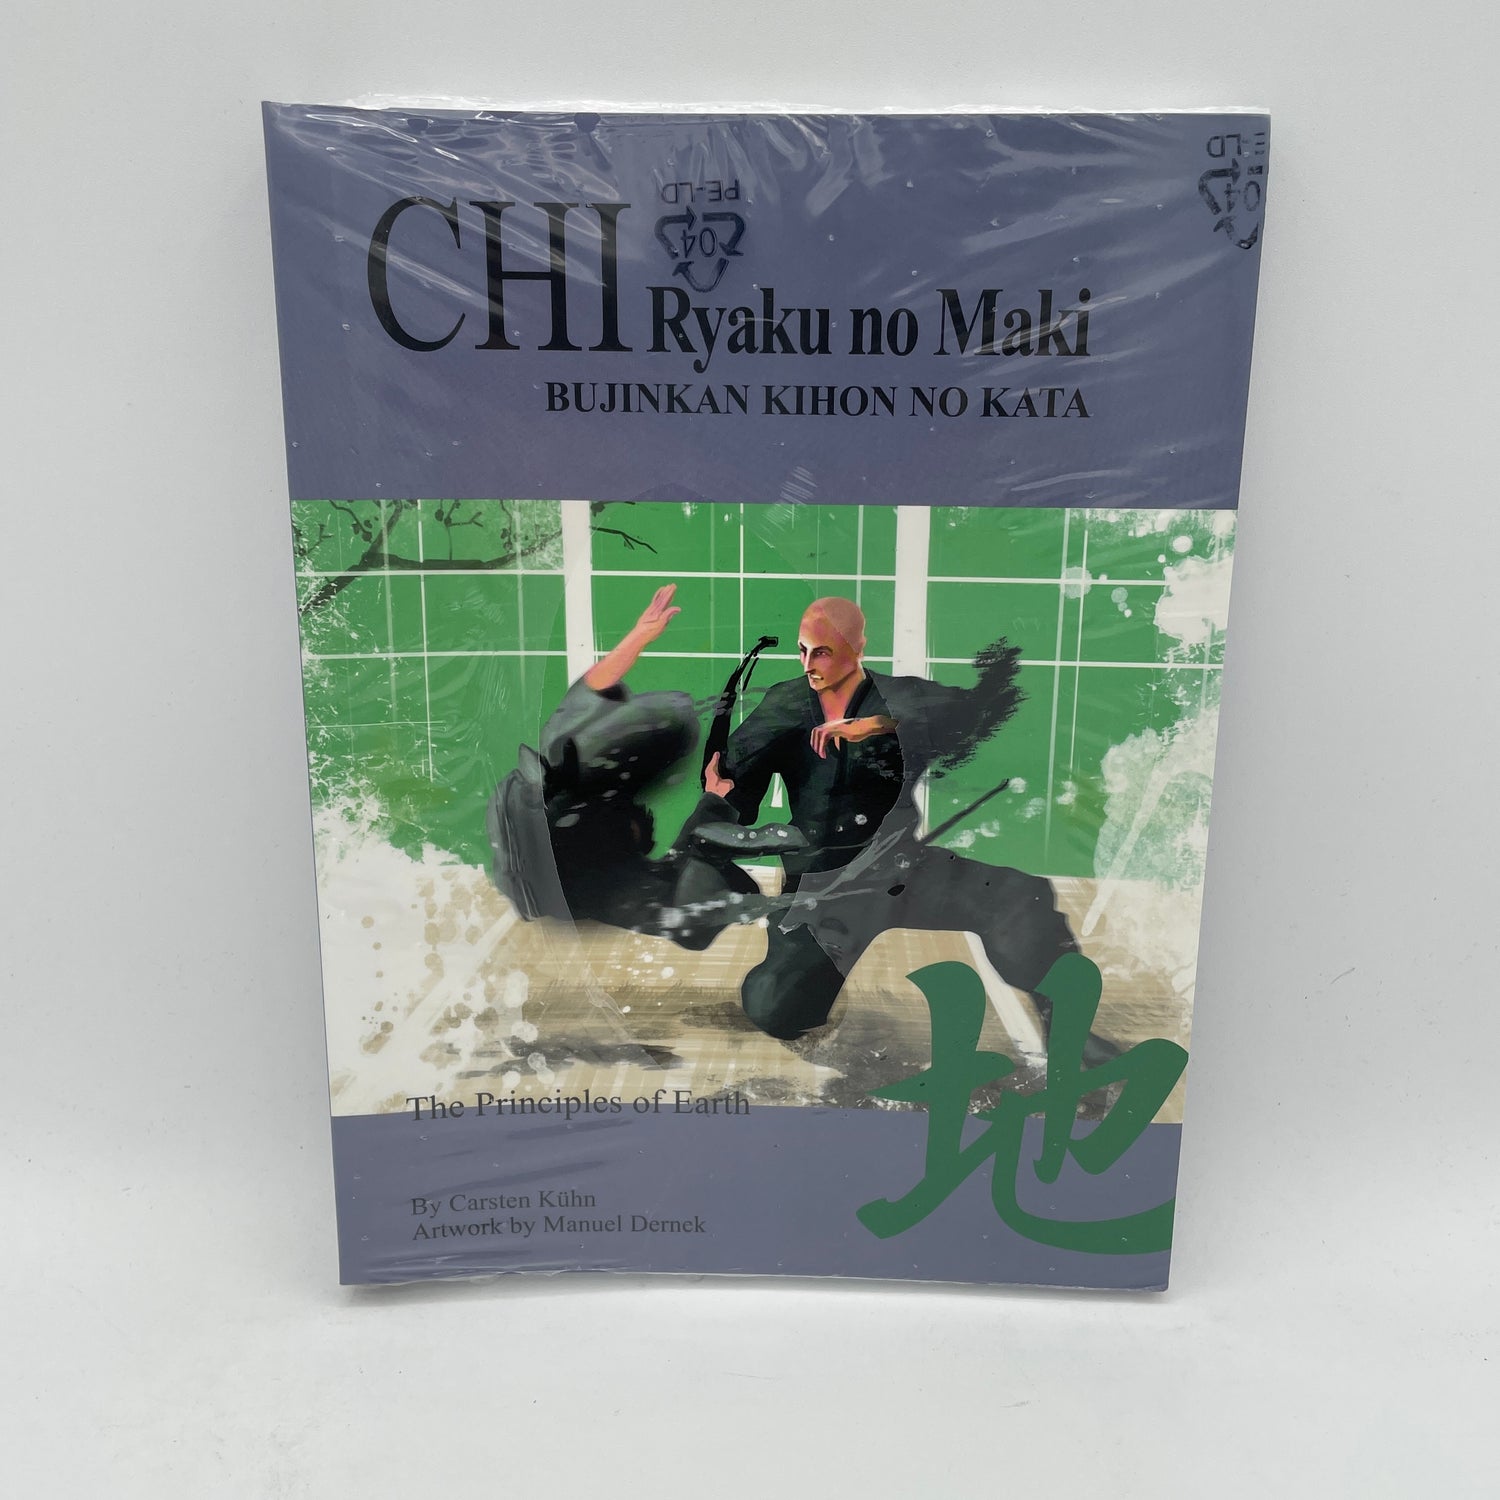 Chi Ryaku no Maki (Principles of Earth) Book by Carsten Kuhn